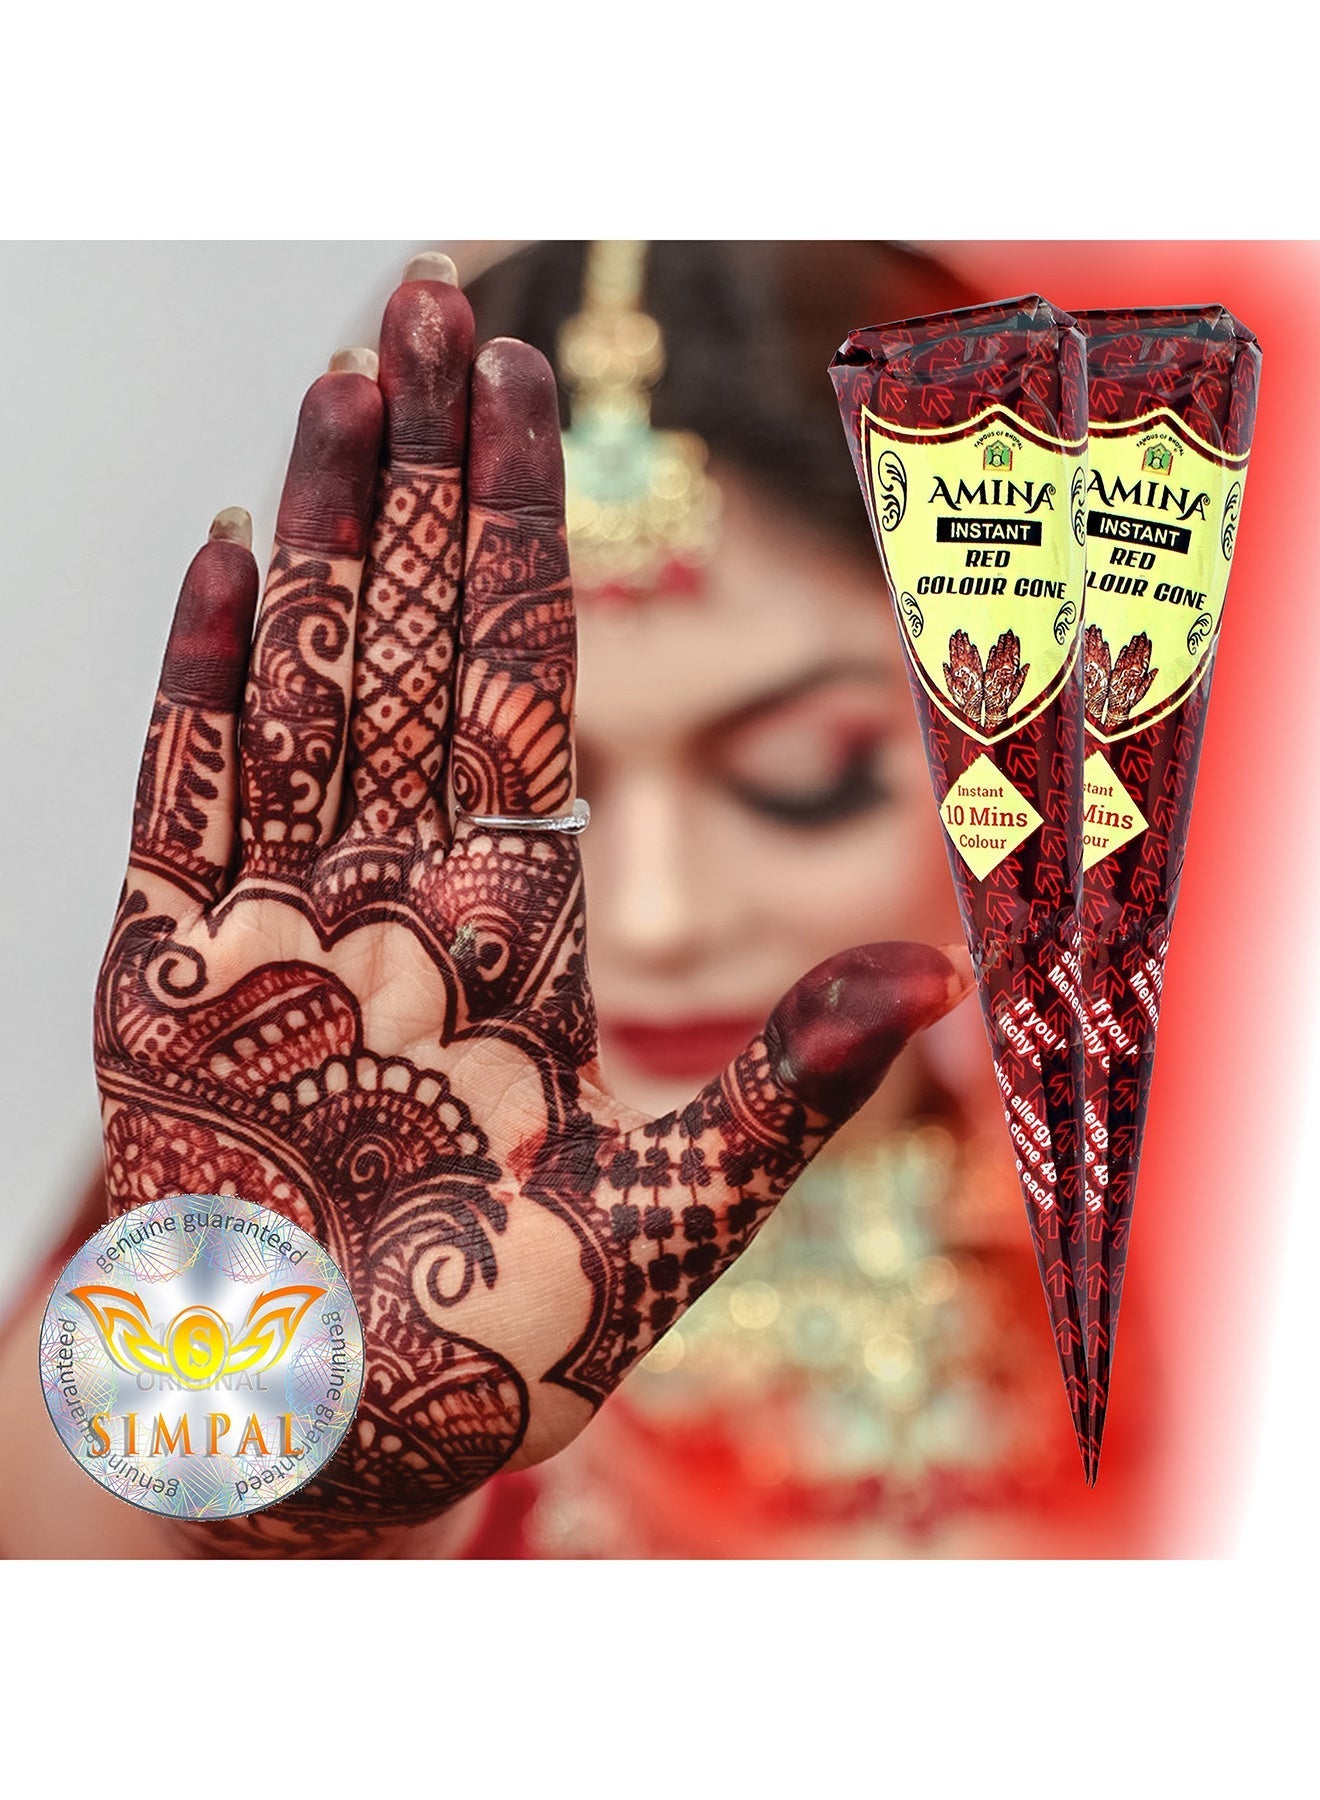 Organic Henna Cones Amina Instant Mehendi Cone Red 25 gm Value Pack of 2 